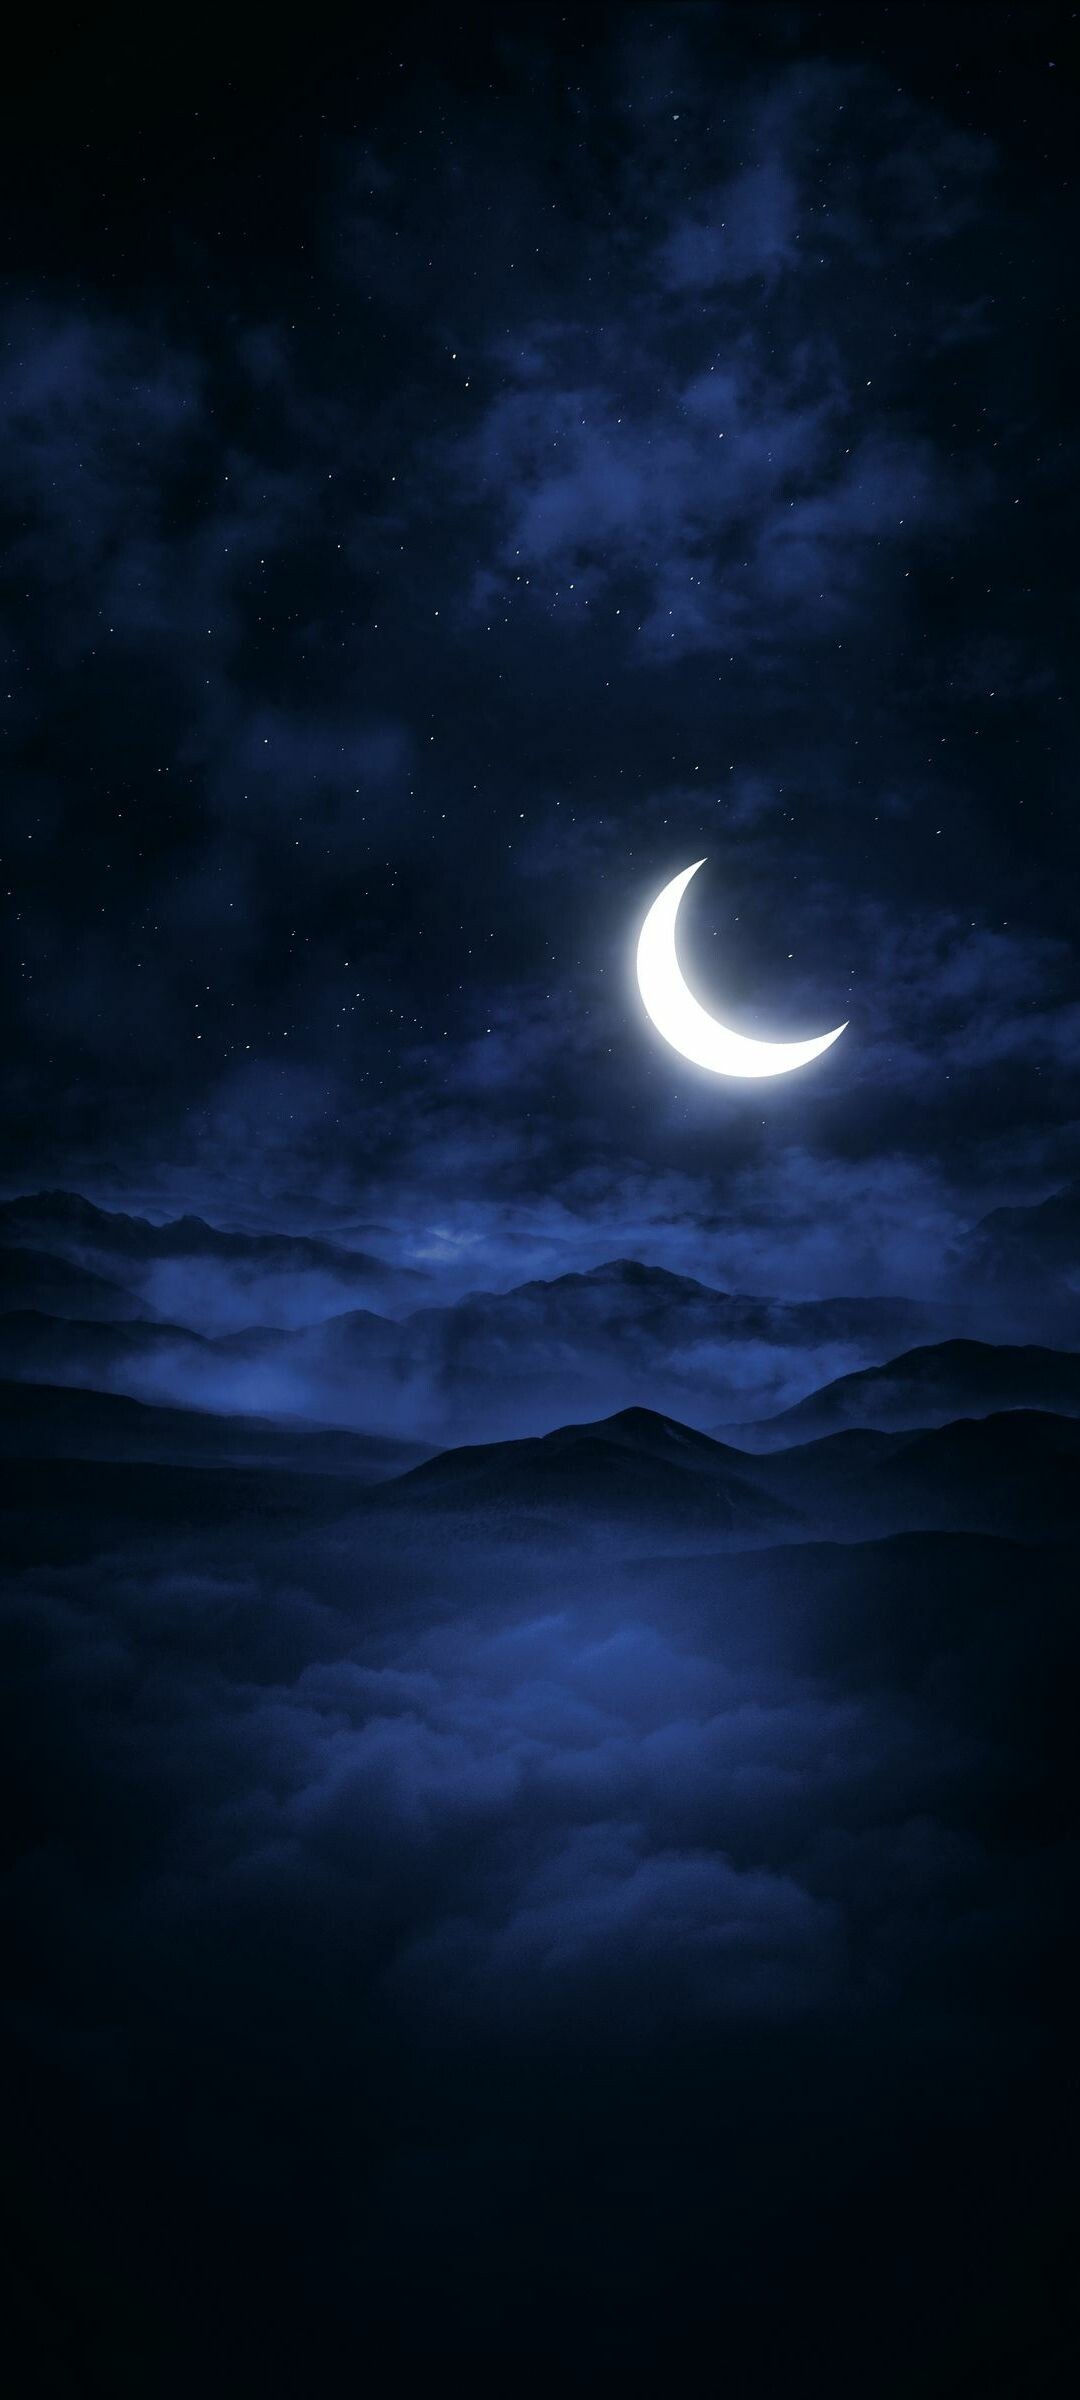 Moonlight: The evening twilight, Moon, Darkness, Atmospheric phenomena. 1080x2400 HD Wallpaper.